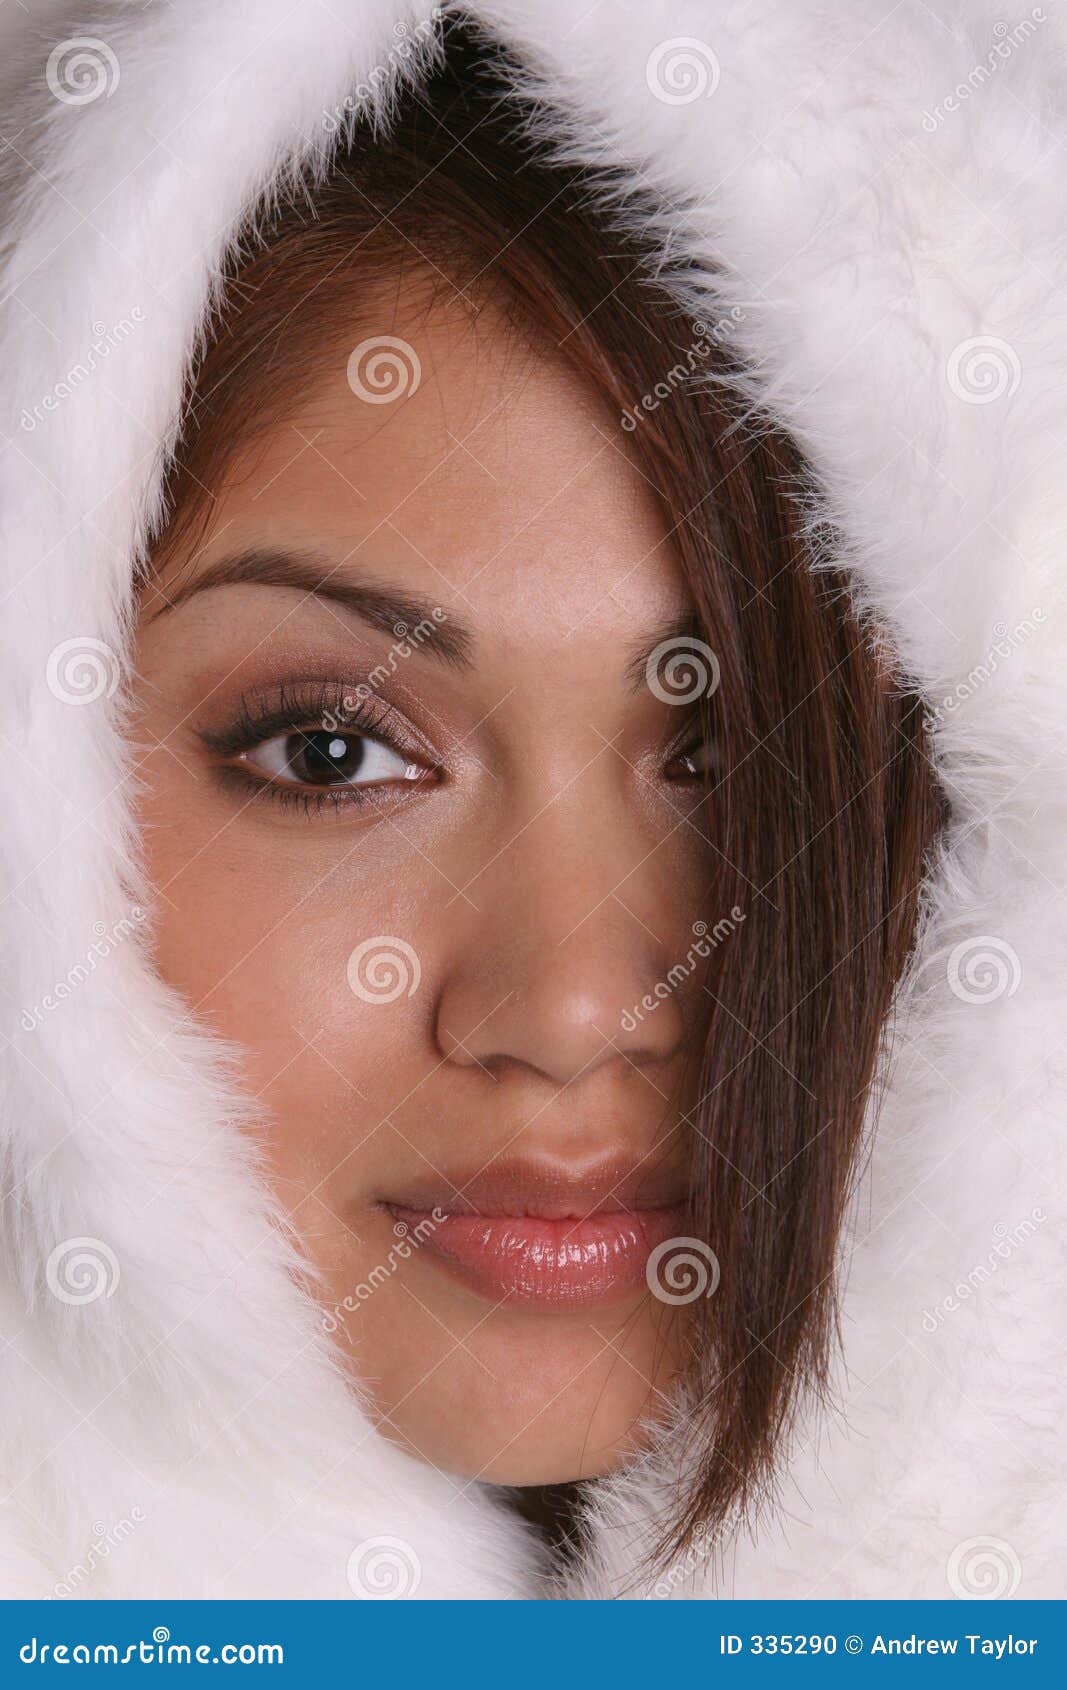 eskimo girl 2